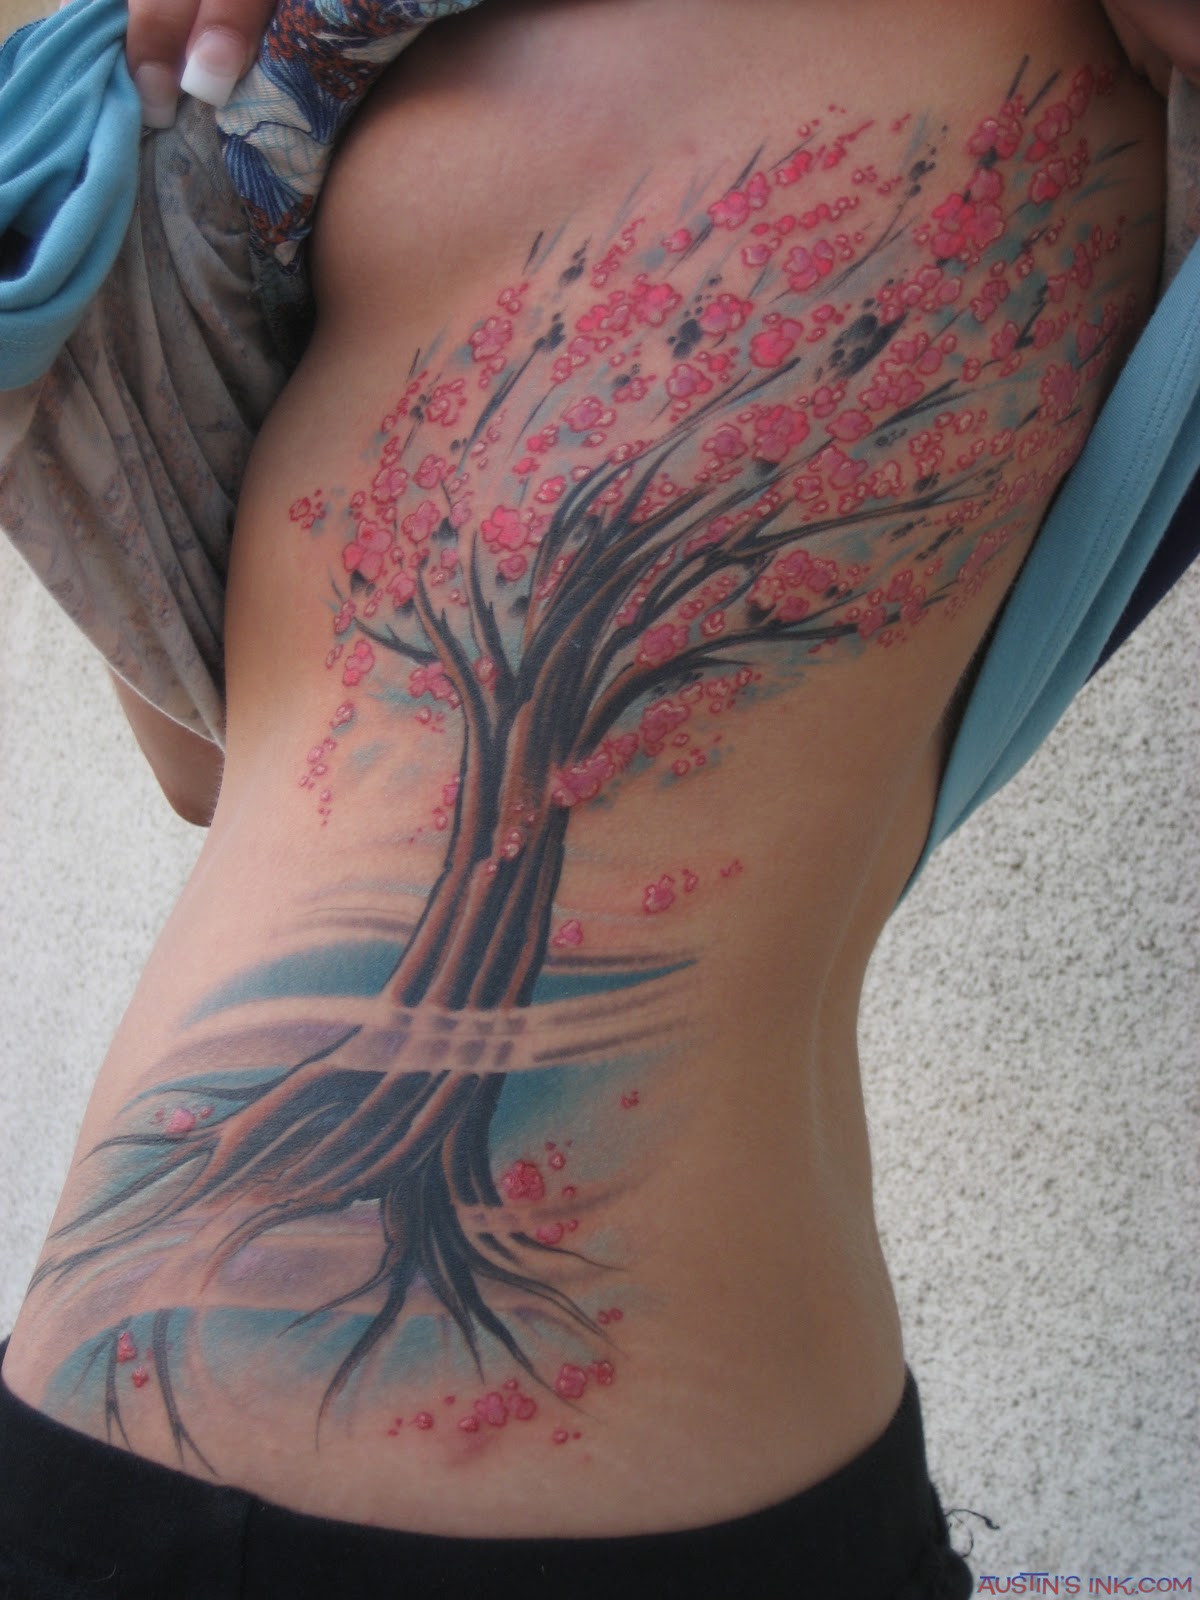 http://3.bp.blogspot.com/-8eR0XHBVLIc/TwwLKBRvqvI/AAAAAAAADfs/8yqV9ToFvJU/s1600/tree+on+girl+tattoo.jpg